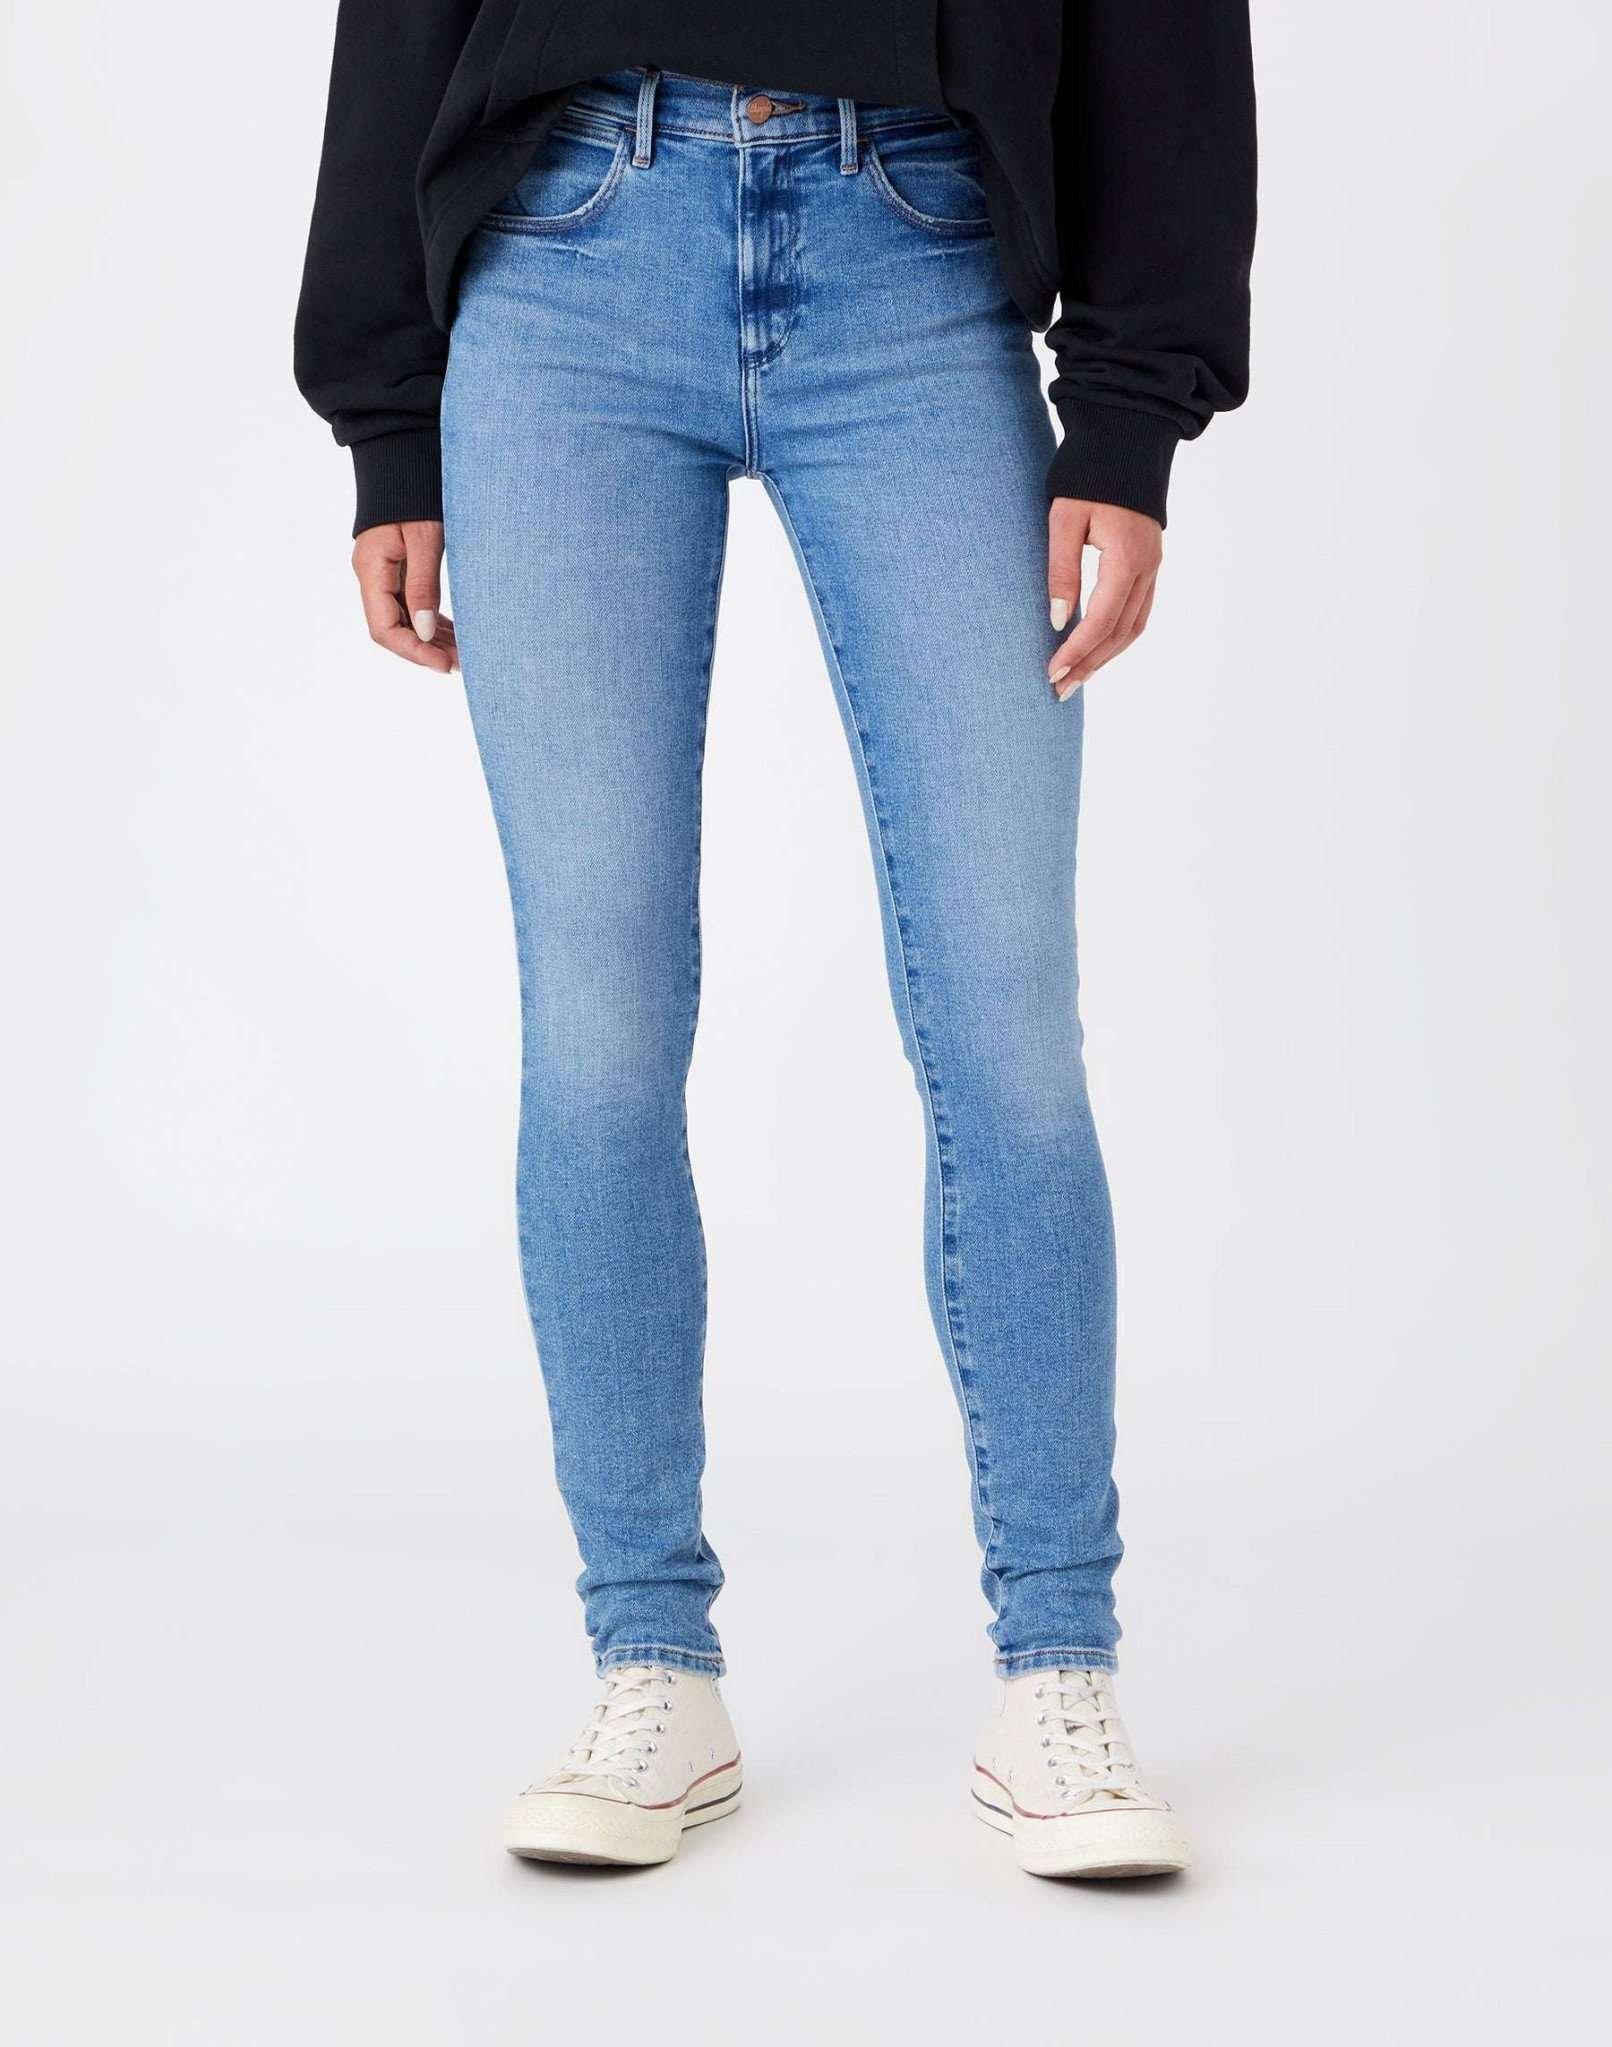 Jeans Skinny Fit Skinny High Rise Damen Hellblau W31 von Wrangler